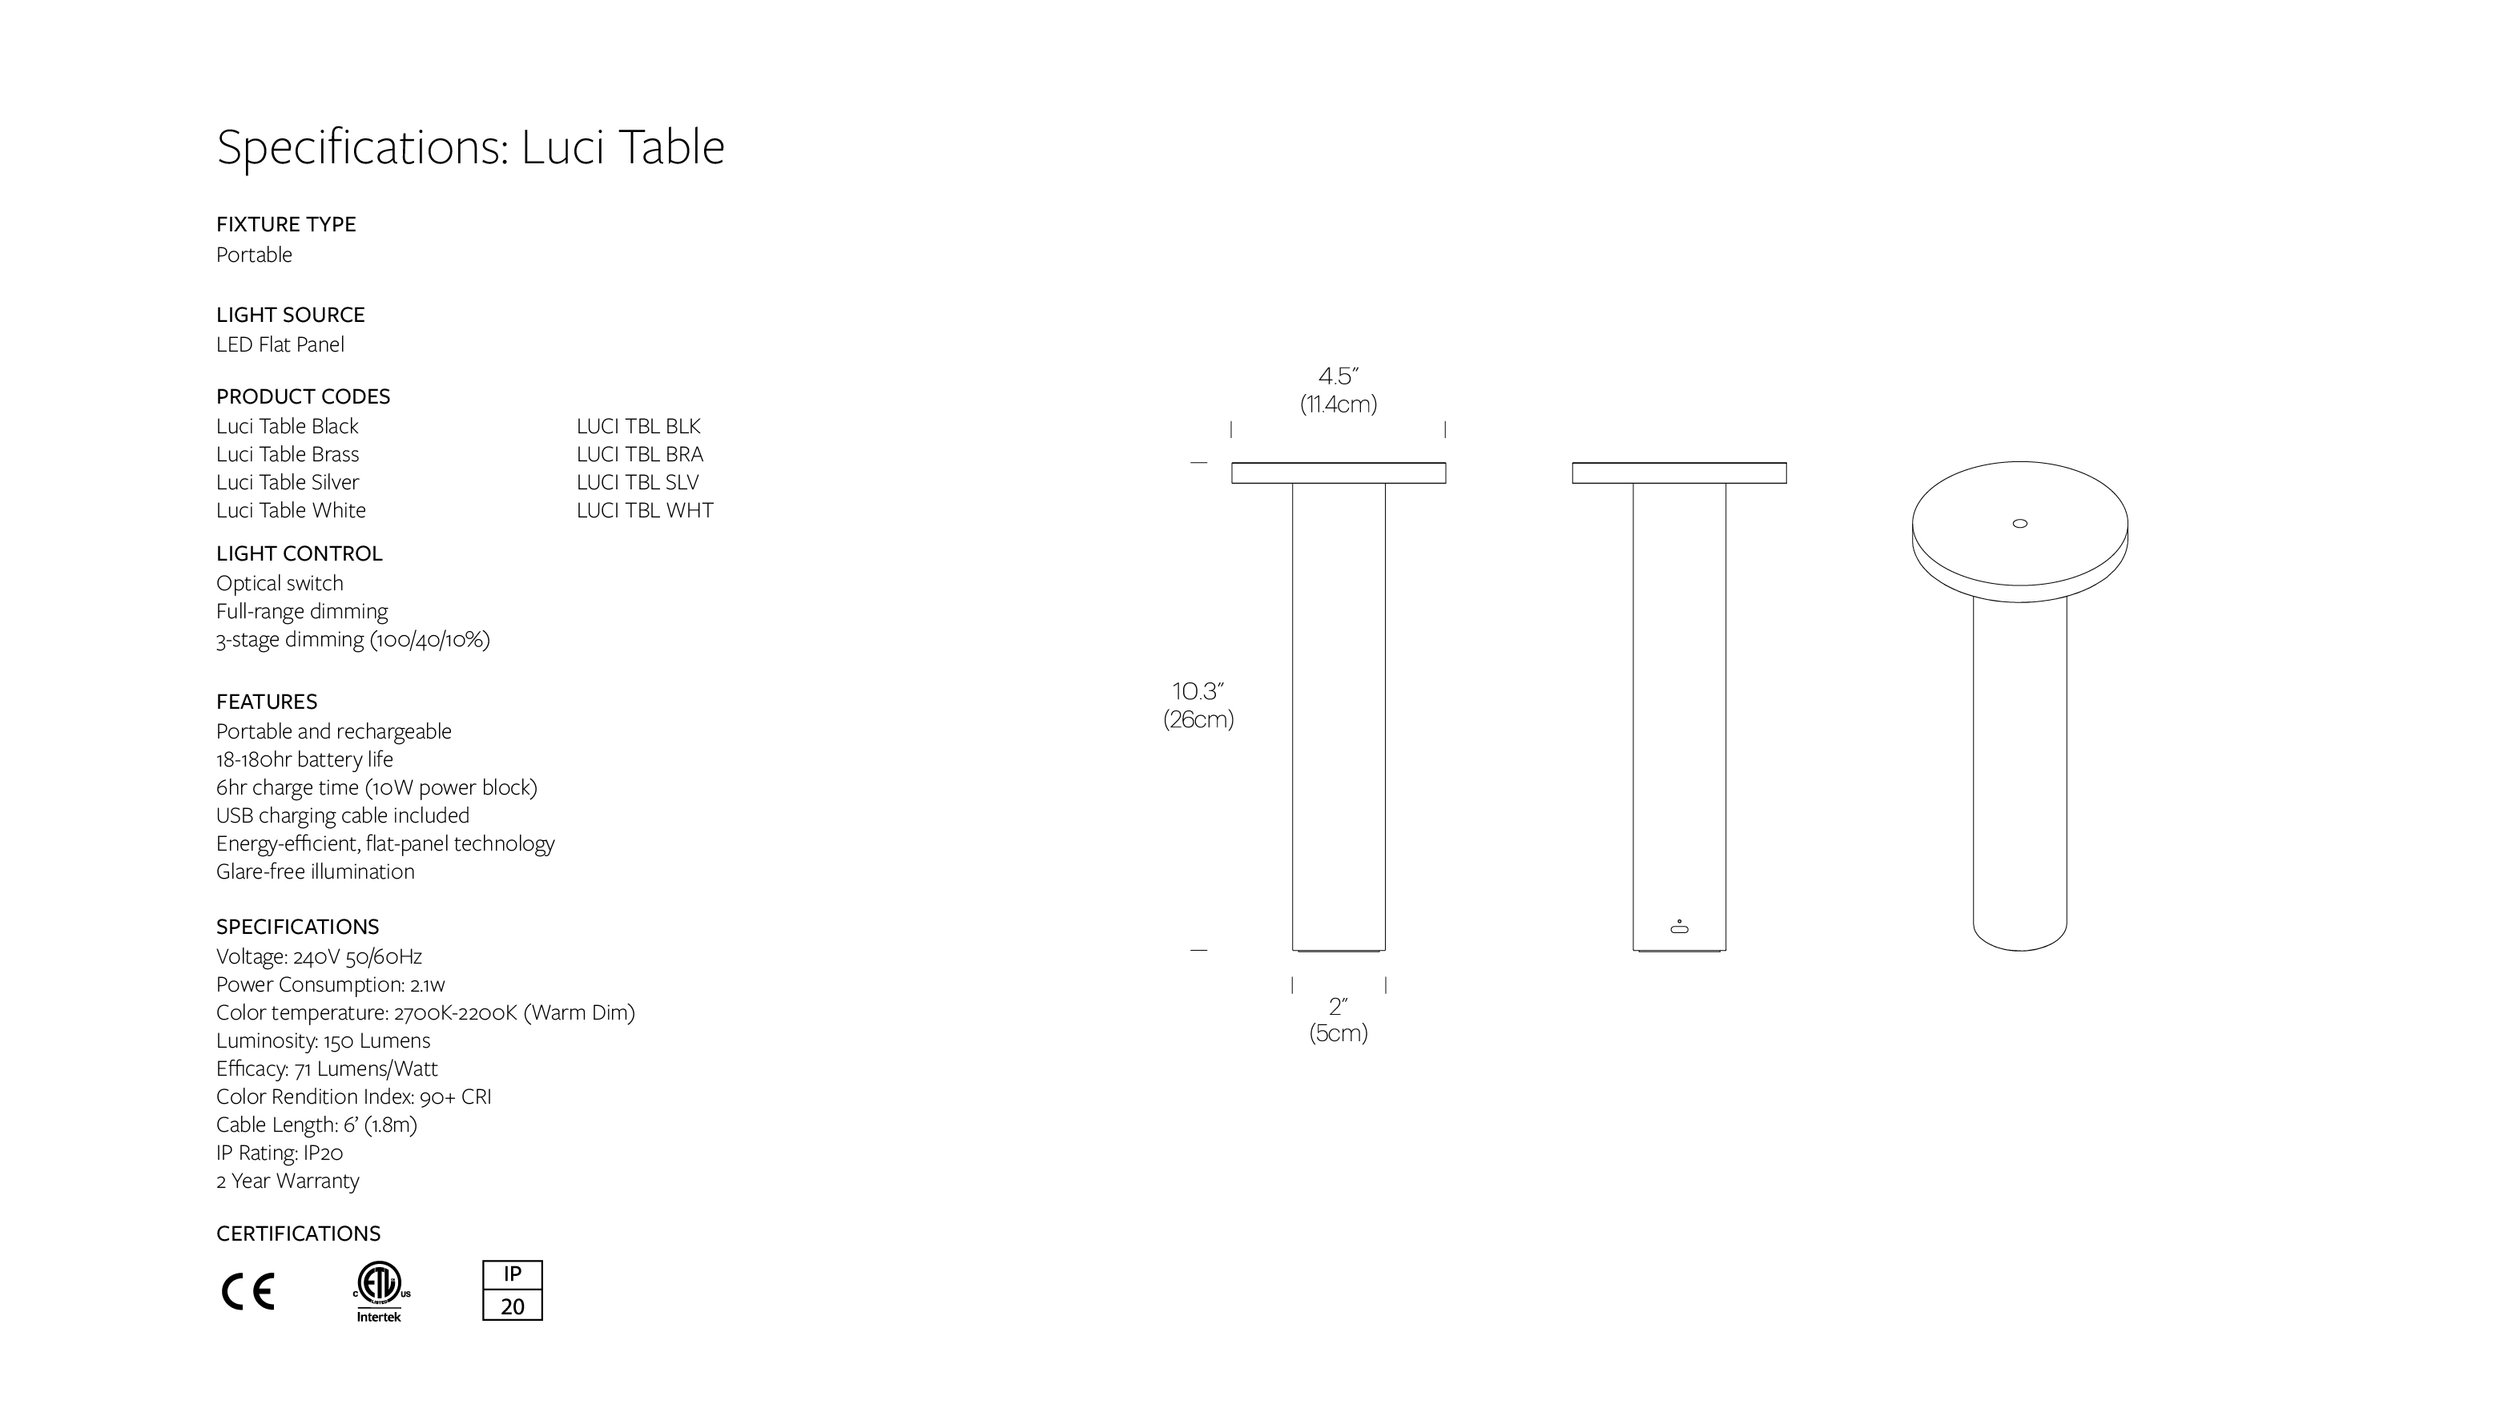 Pablo+Designs+Luci Table and Floor+EU+Spec+Sheet 022822-21.jpg